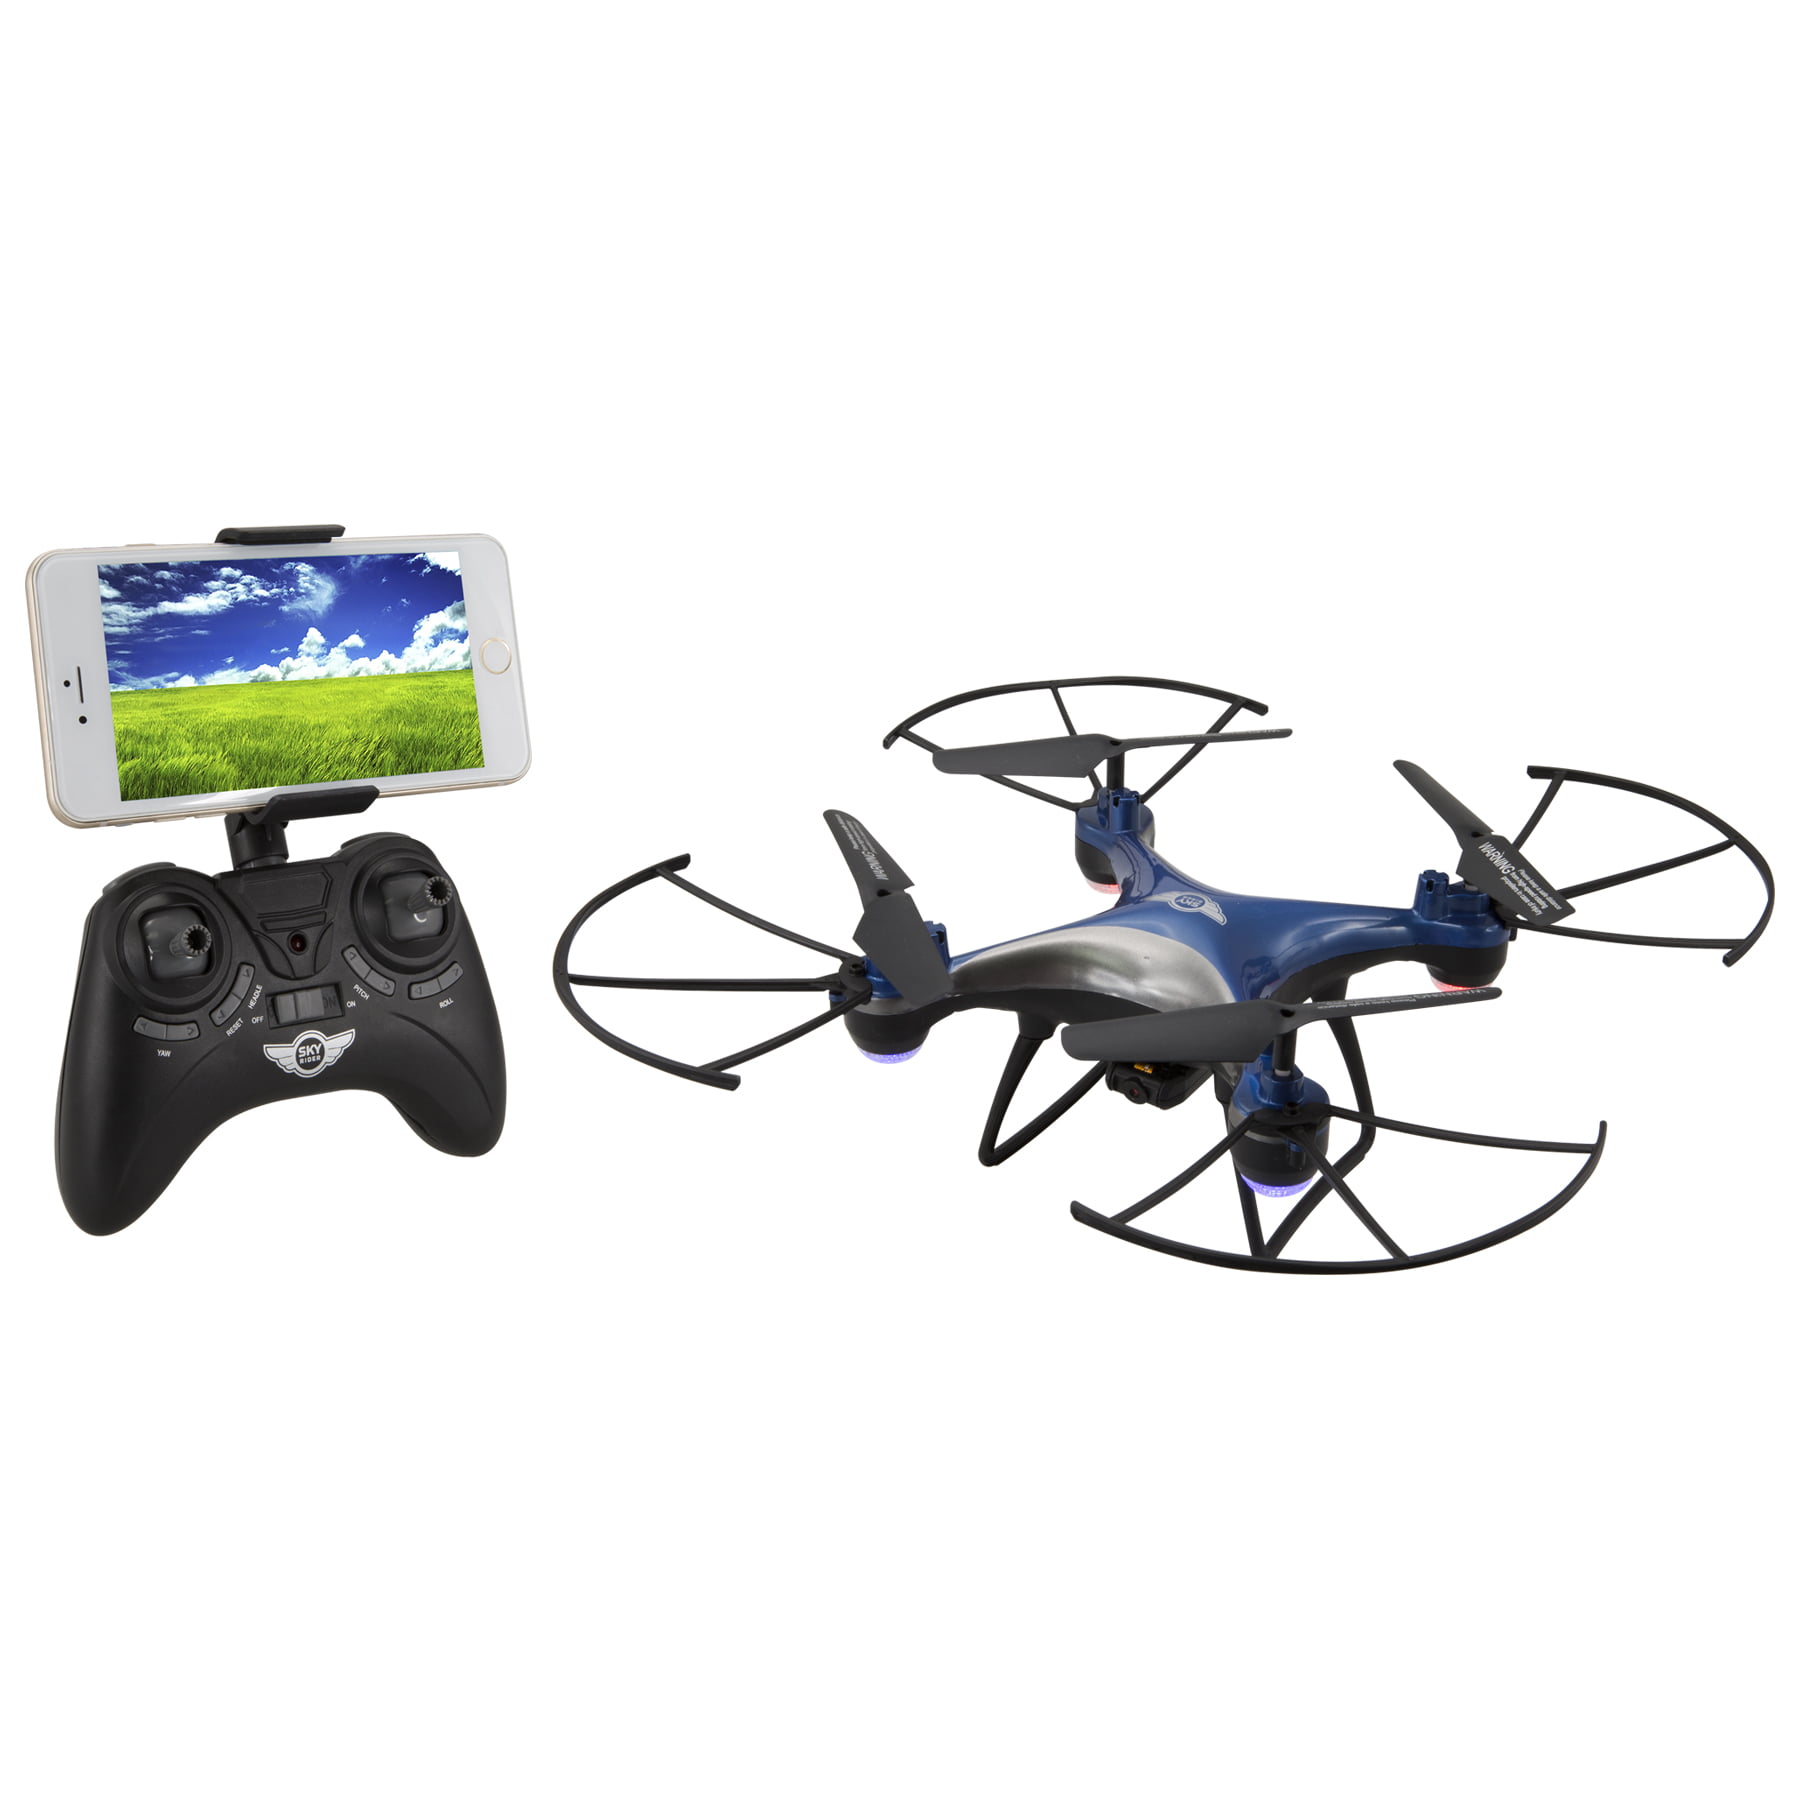 Rider Eagle 3 Pro Quadcopter Drone with Wi-Fi Camera, Multiple Colors - Walmart.com